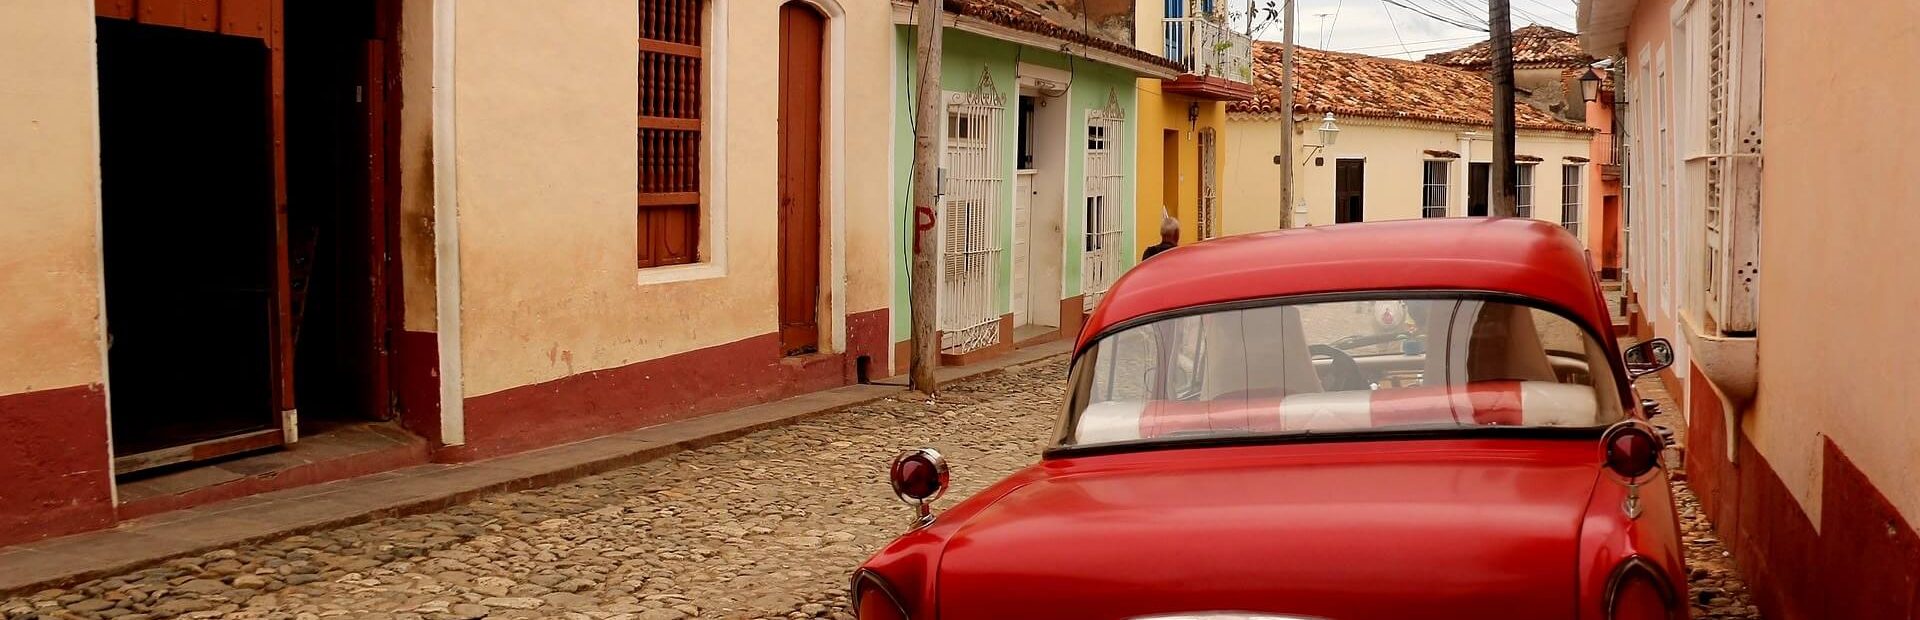 UNESCO town in Cuba